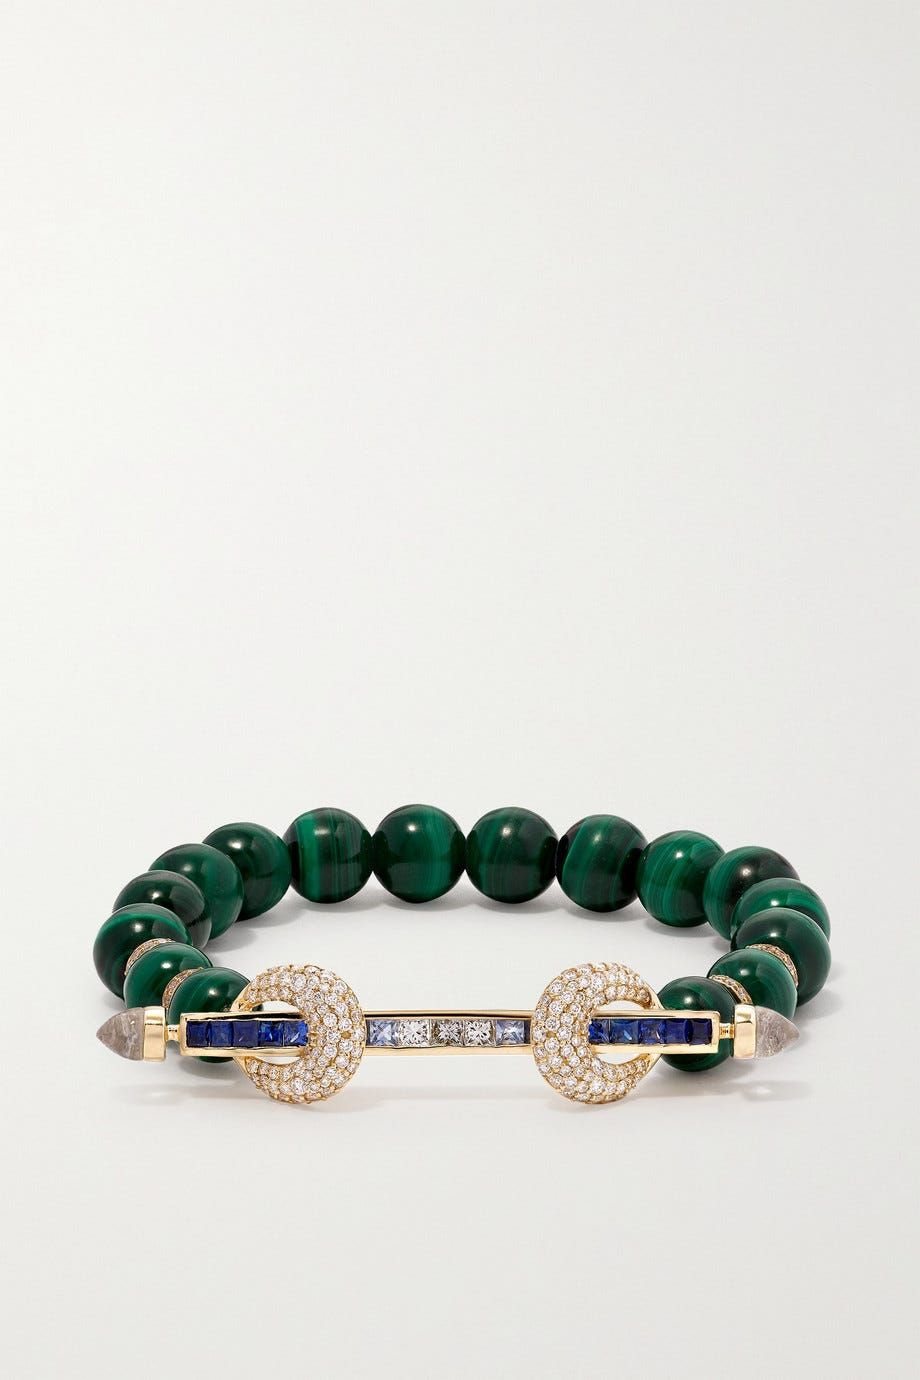 SilverGoldRosegold Female Personalized Name Bracelet by Luxury Brings  Party